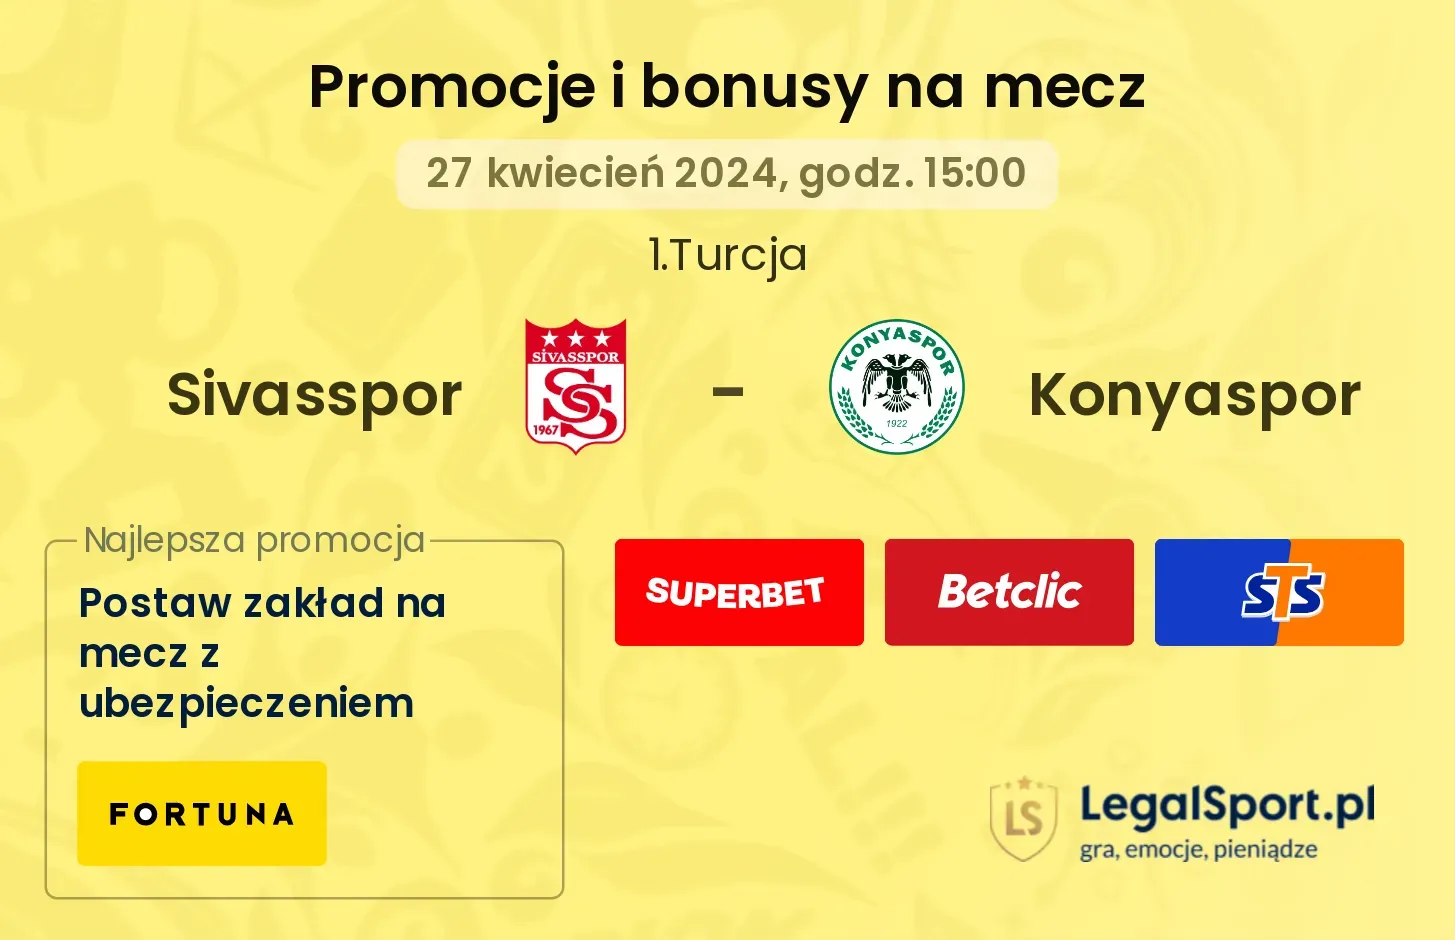 Sivasspor - Konyaspor promocje bonusy na mecz